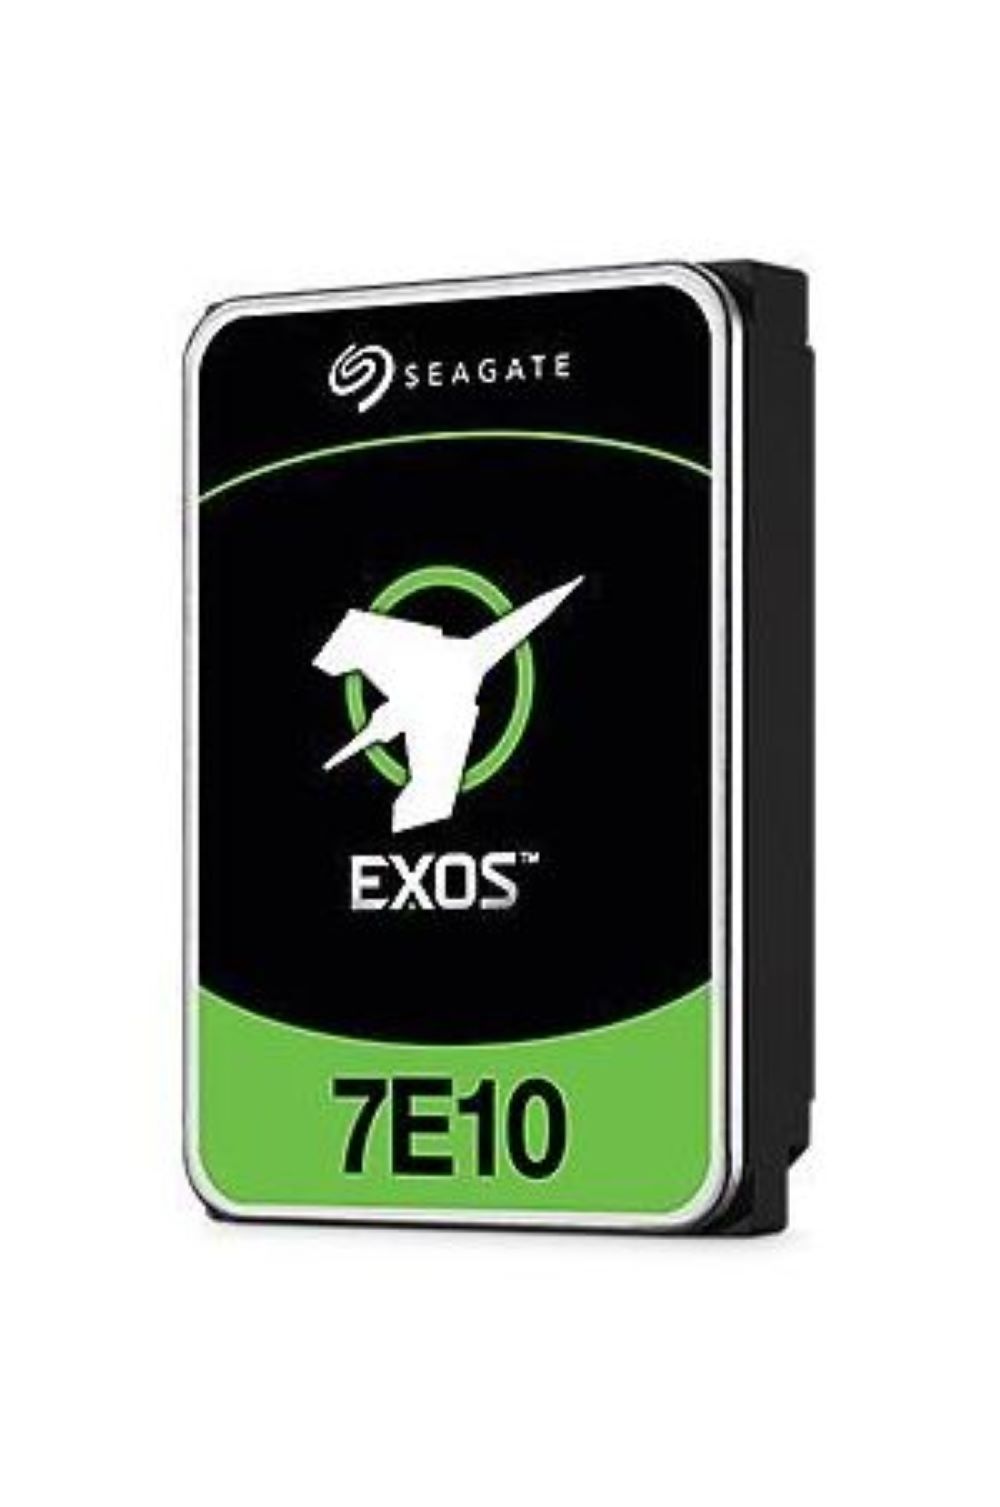 Жесткий диск HDD Seagate Exos 7E10 SAS 2TB (ST2000NM001B) жесткий диск 2tb sas 12gb s seagate st2000nm001b exos 7e10 3 5 7200rpm 256mb